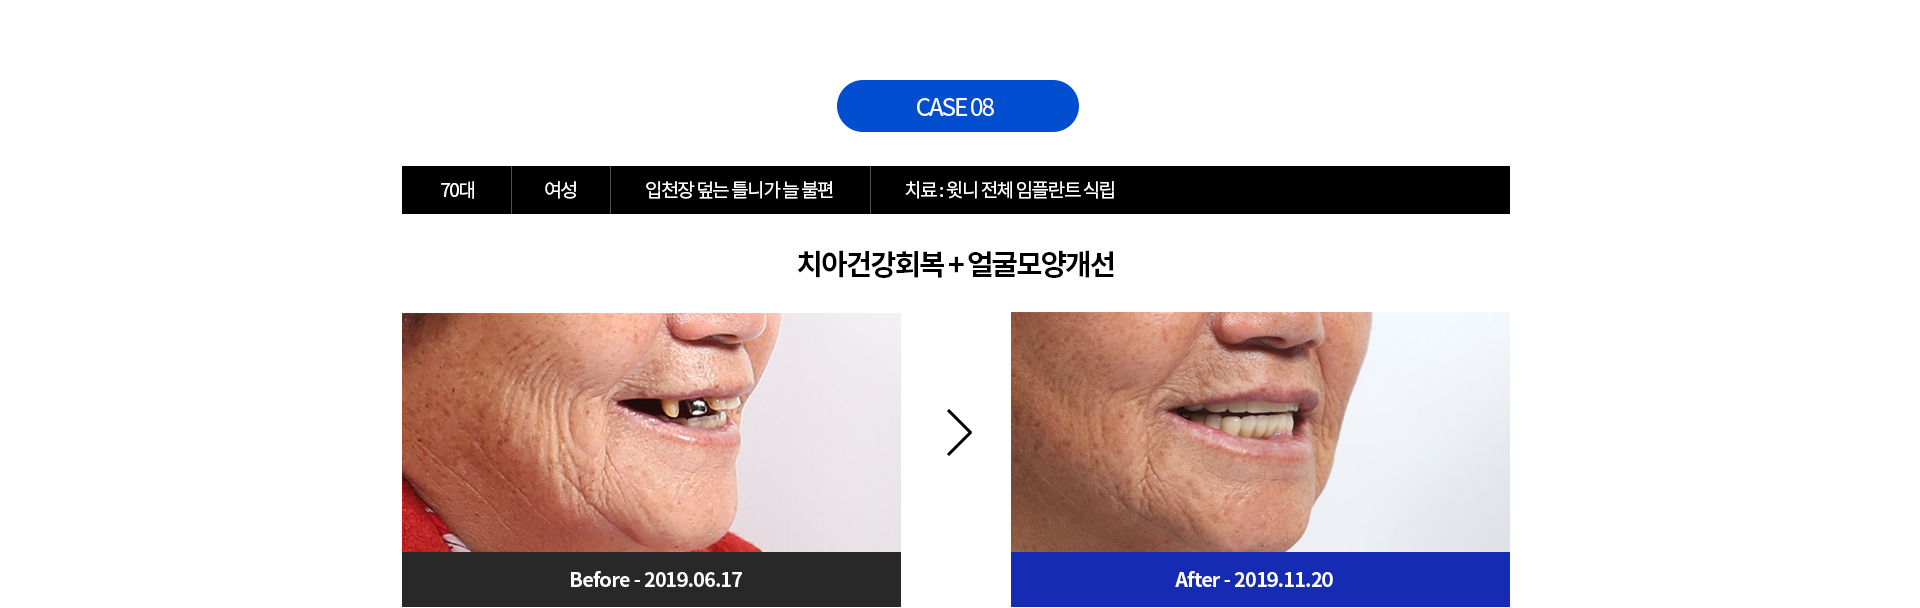 CASE 08 - 70대 여성 입천장 덮는 틀니가 늘 불편 | 치료 : 윗니 전체 임플란트 식립 | 치아건강회복 + 얼굴모양개선